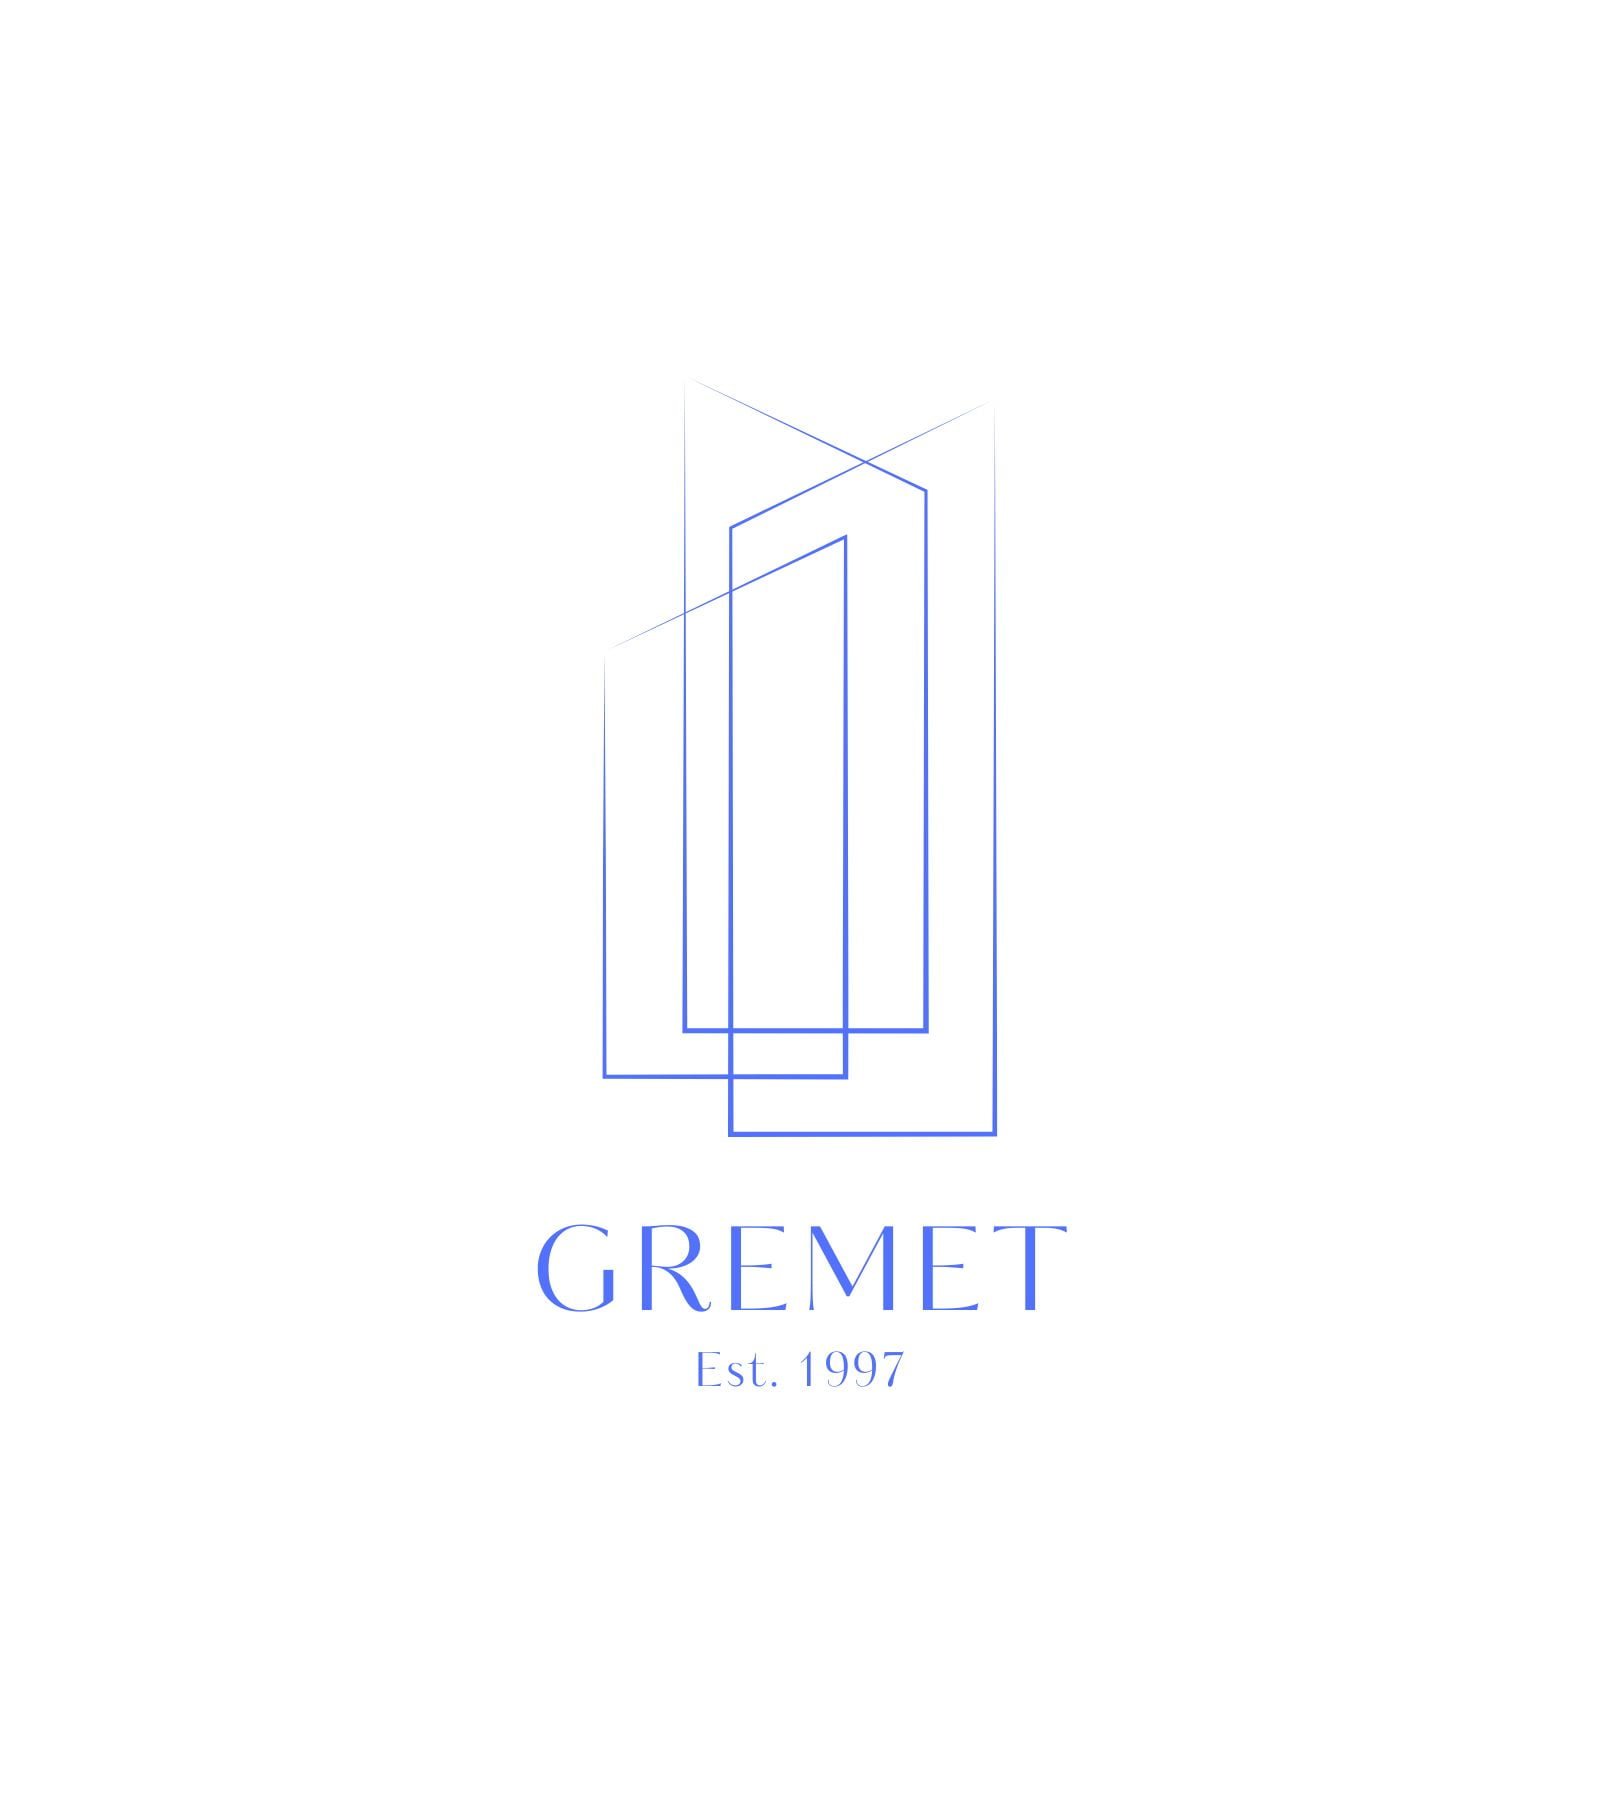 Gremet - Industry Leading Construction Window Company - Richart Web Design